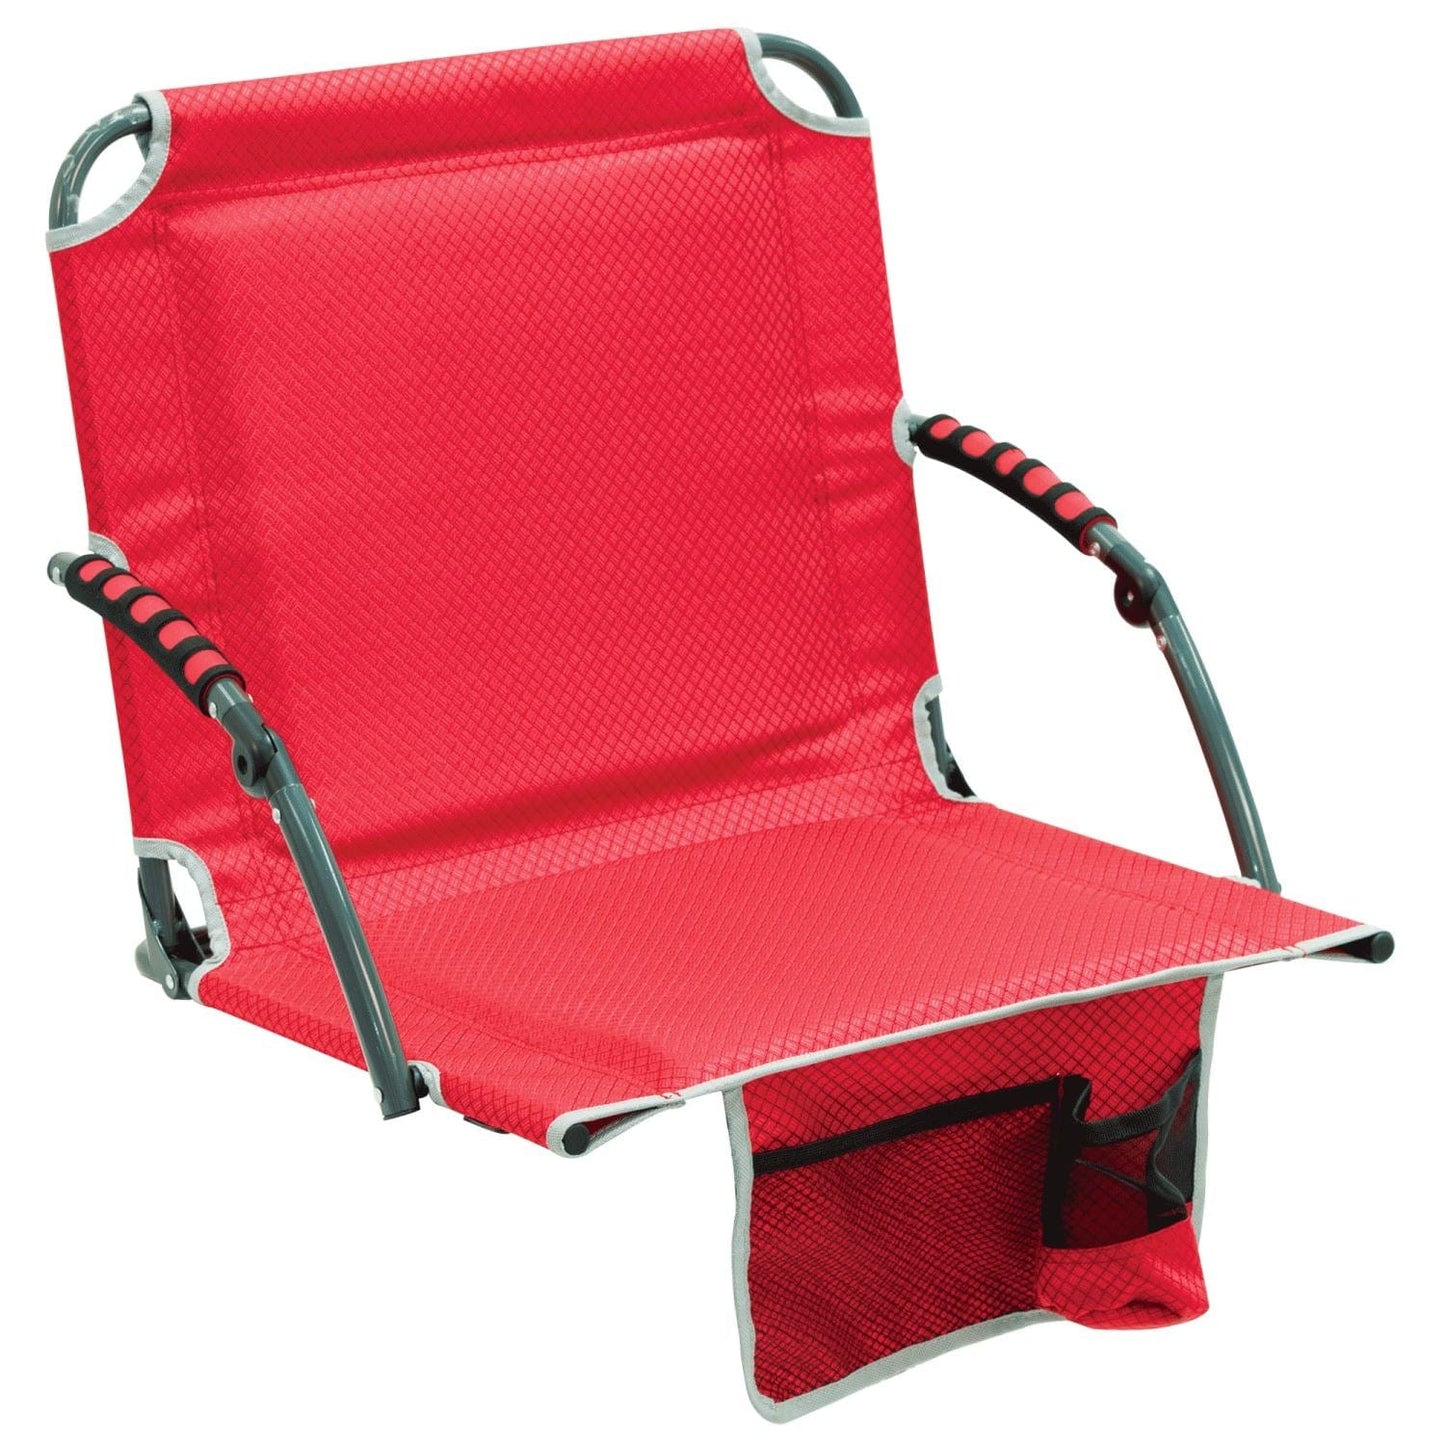 RIO Stadium Seat RIO Gear | Bleacher Boss PAL Stadium Seat - Red 10121-409-1